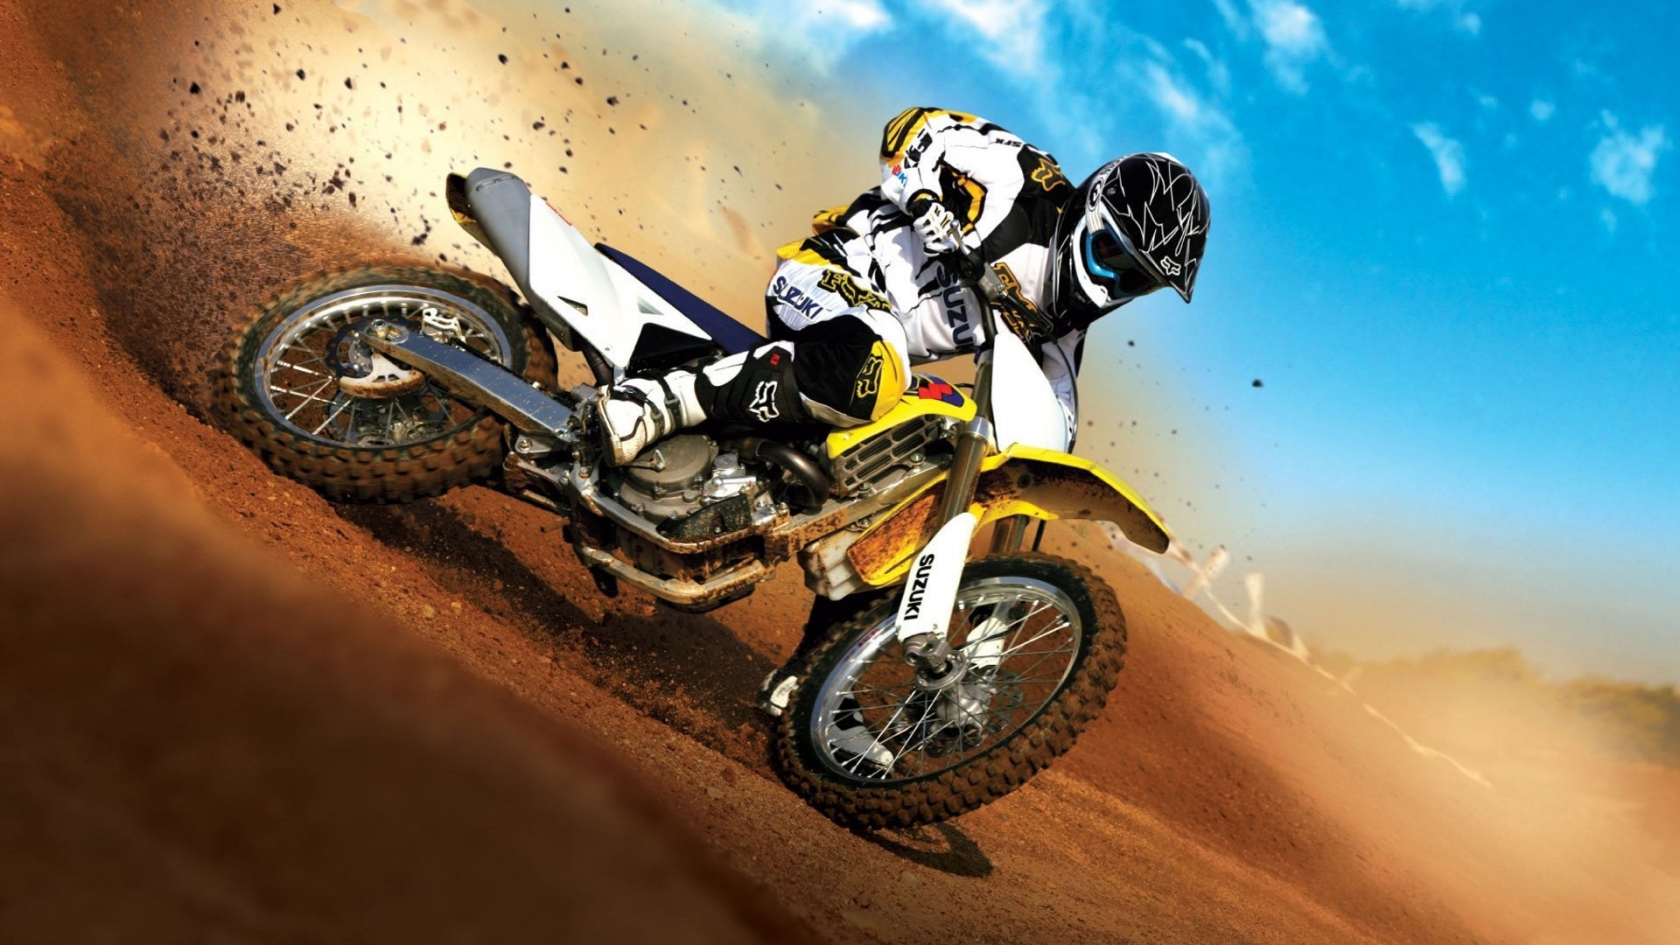 Moto Sports for 1680 x 945 HDTV resolution